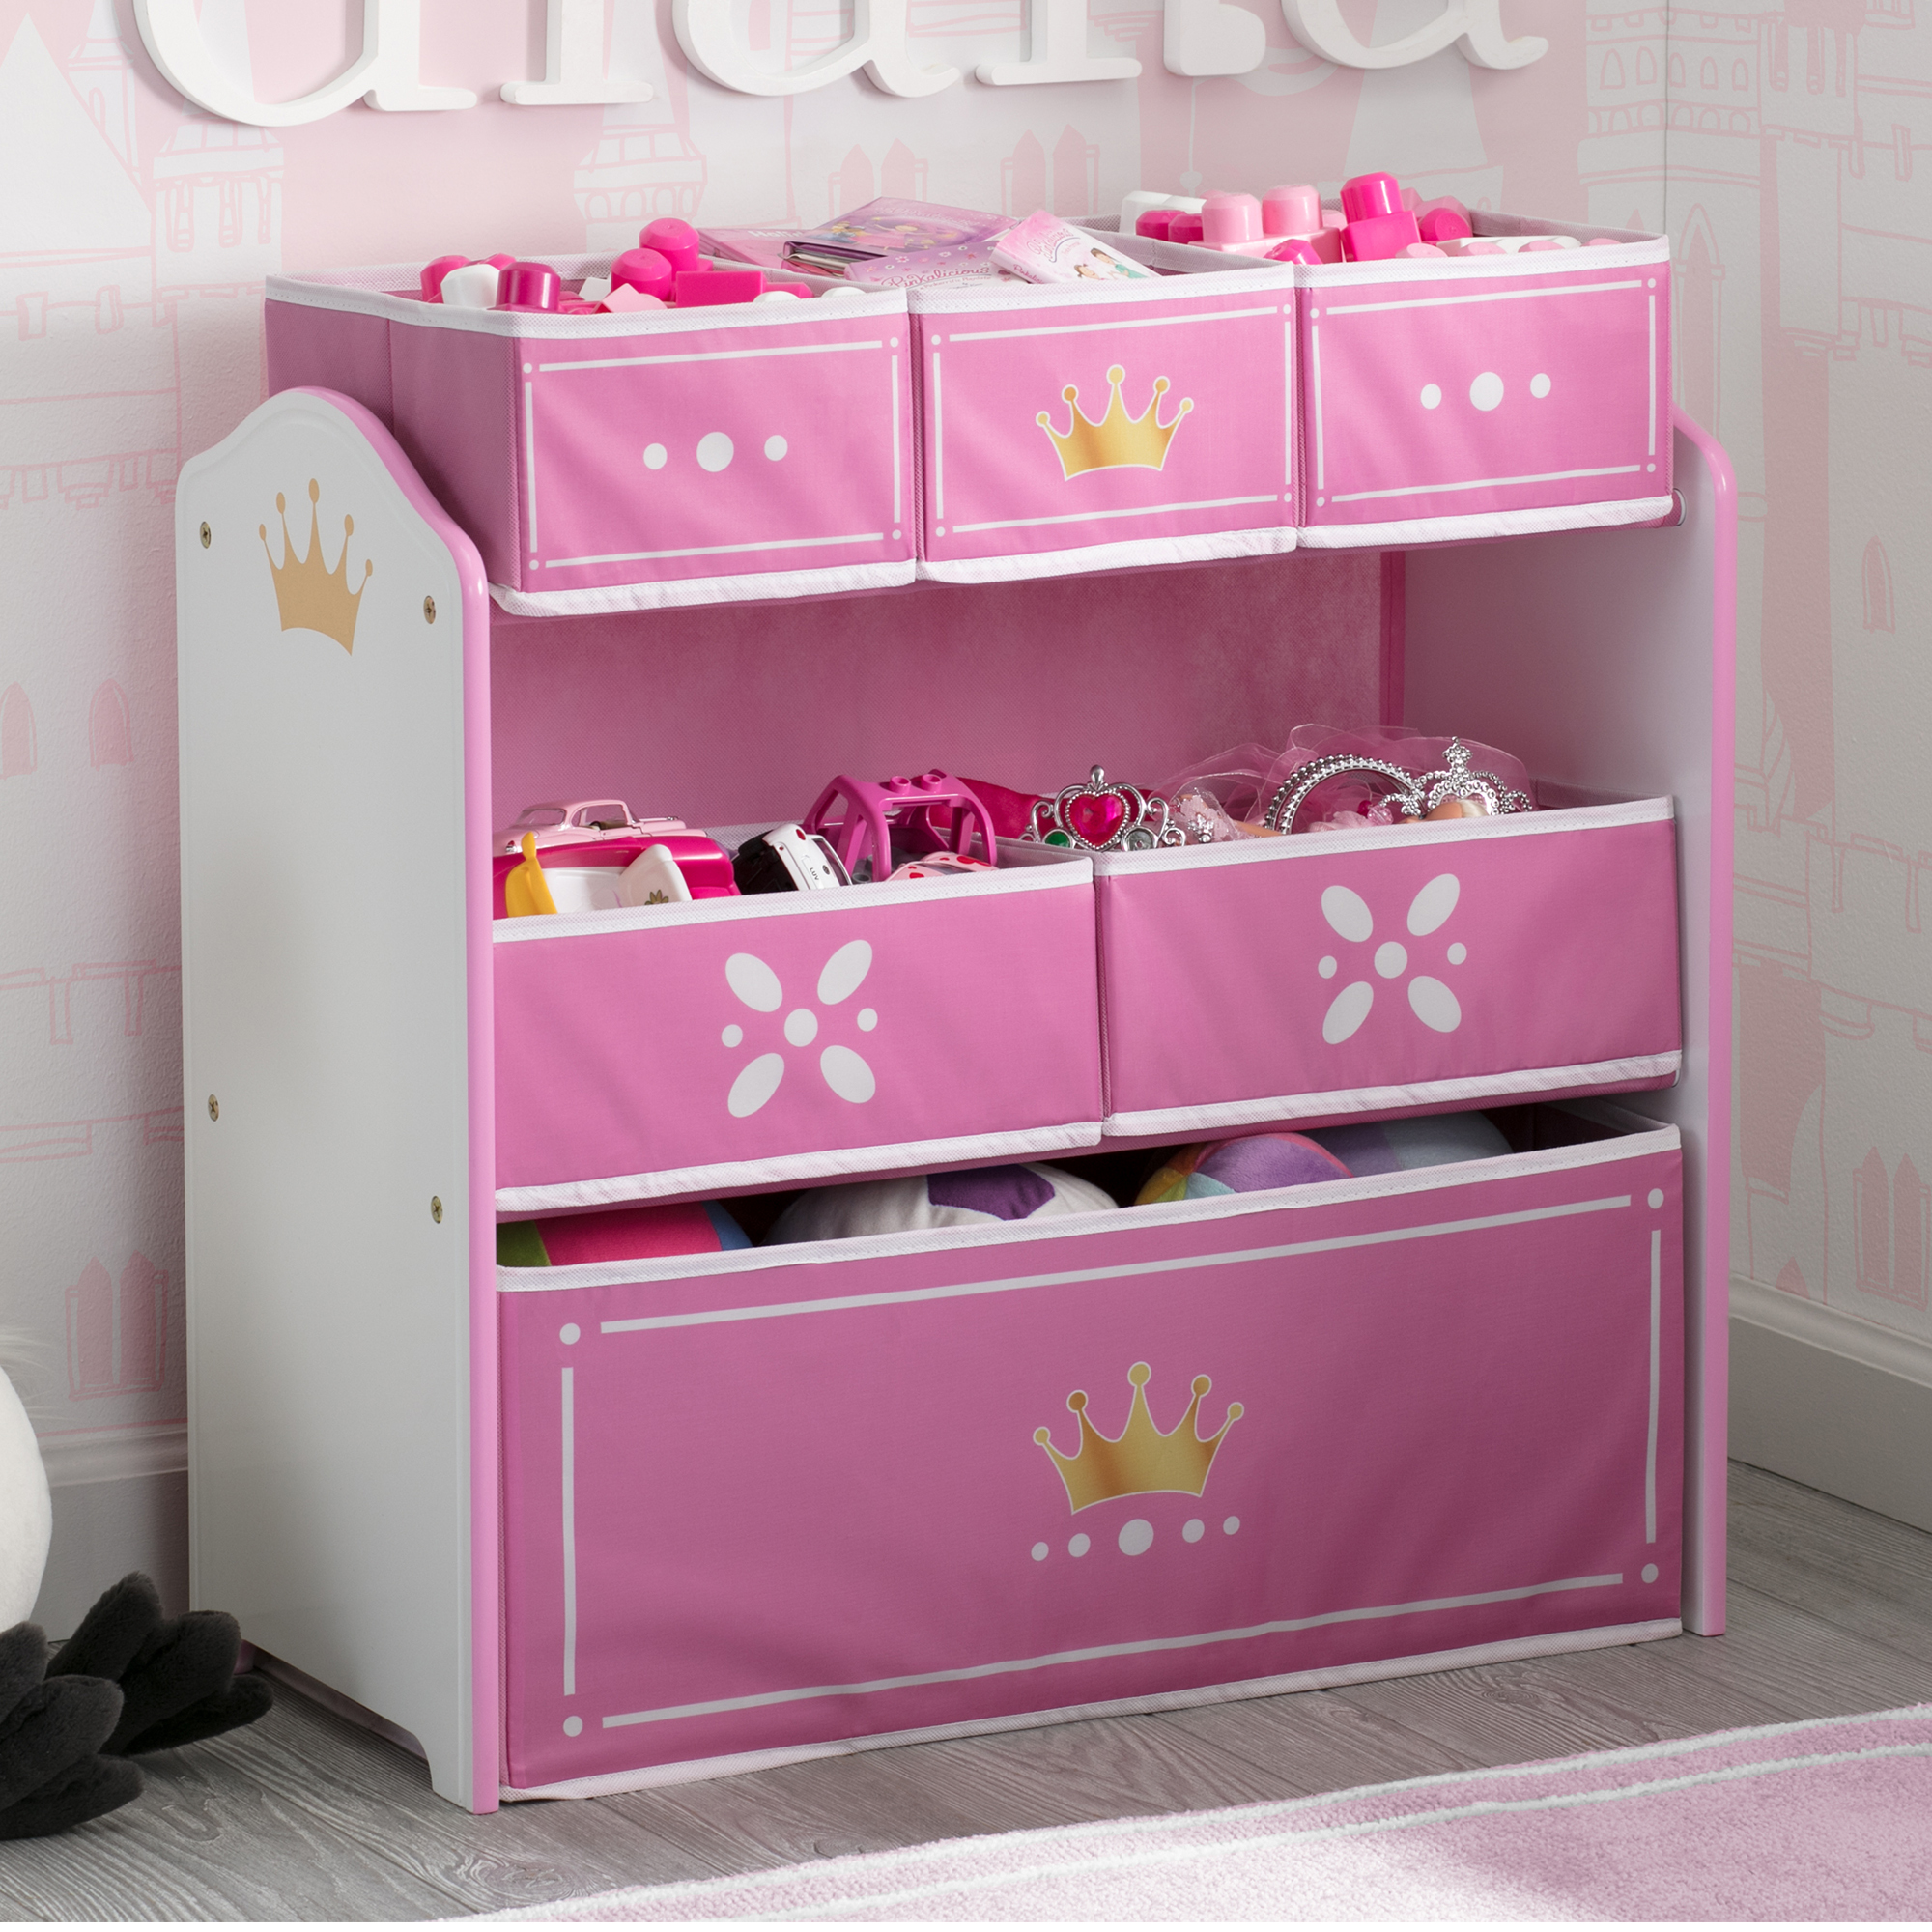 Delta Children Princess Crown 6 Bin Storage Toy Organizer, Greenguard Gold Certified, Solid Wood & Fabric, White/Pink - image 3 of 7